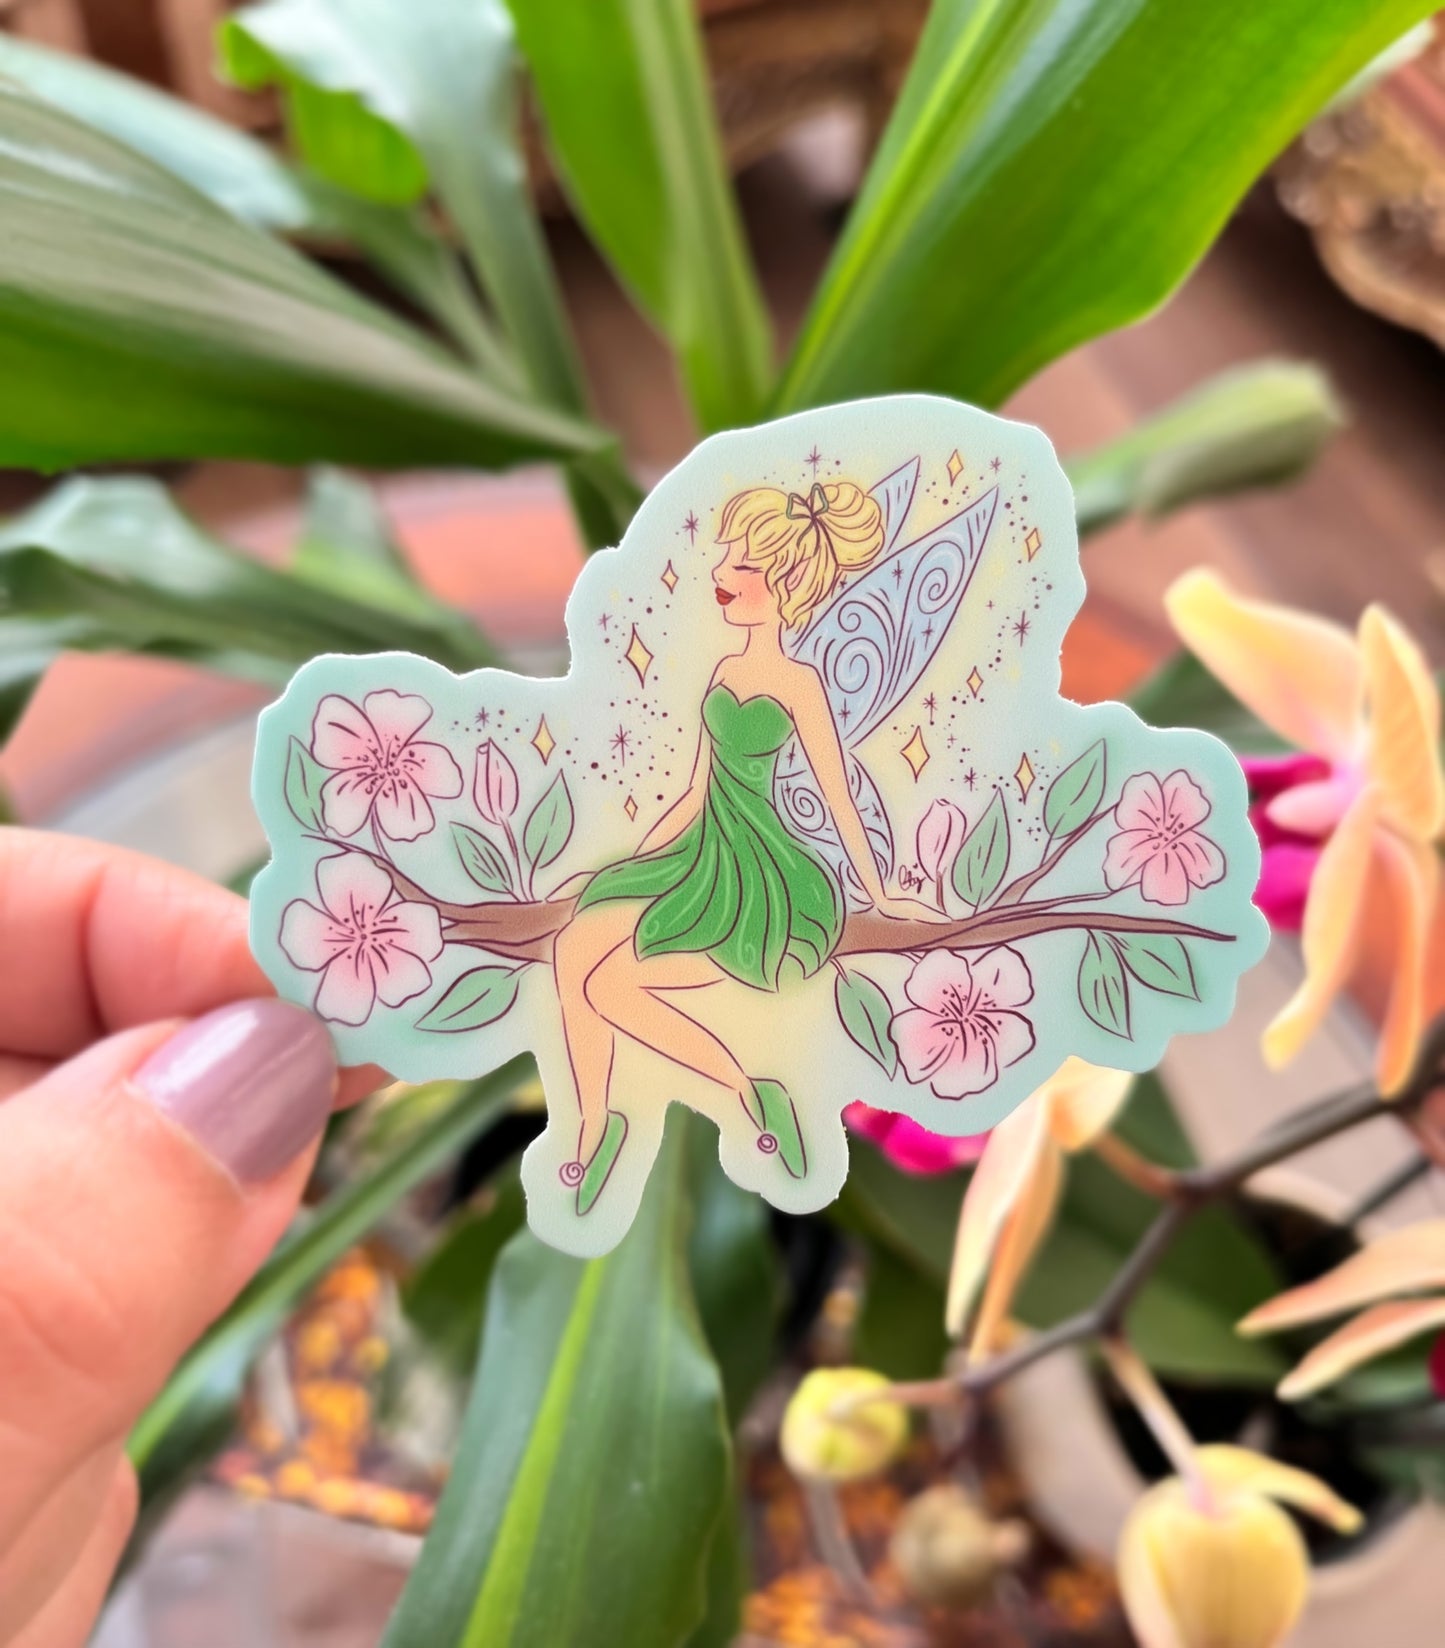 Sparkle & Tinker Fairy Vinyl Sticker